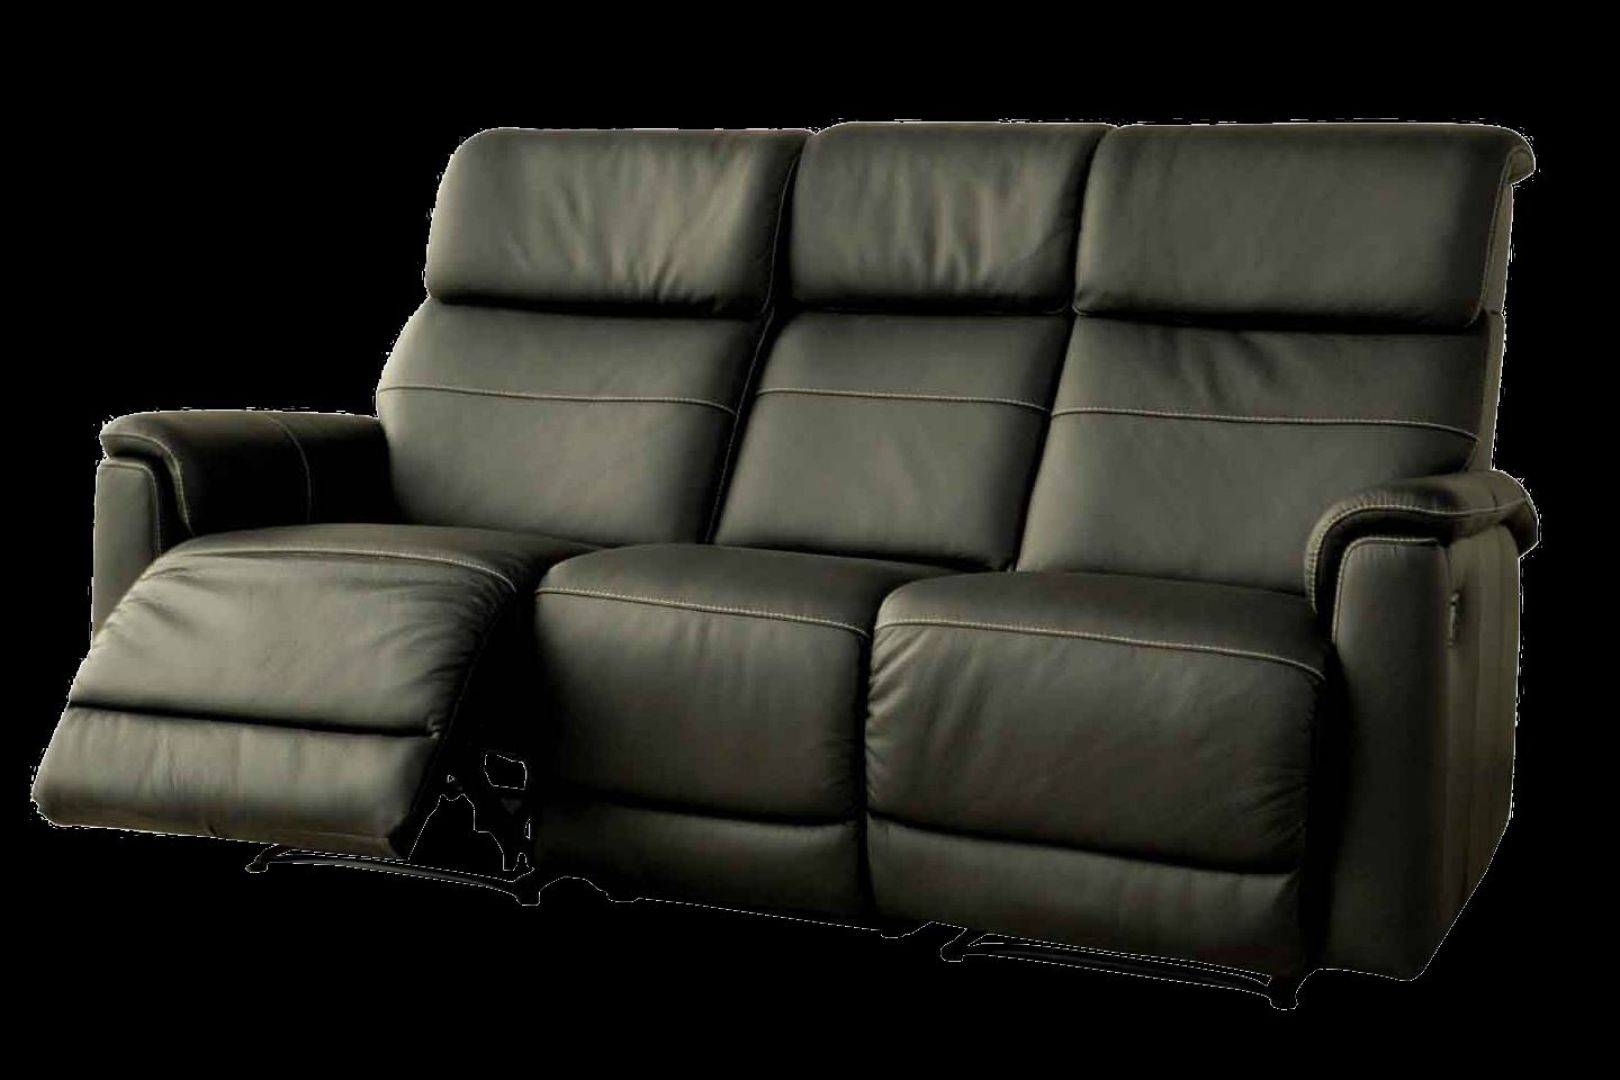 Potrójna sofa Merengue z funkcją relax, marki Vinotti
Fot. Vinotti